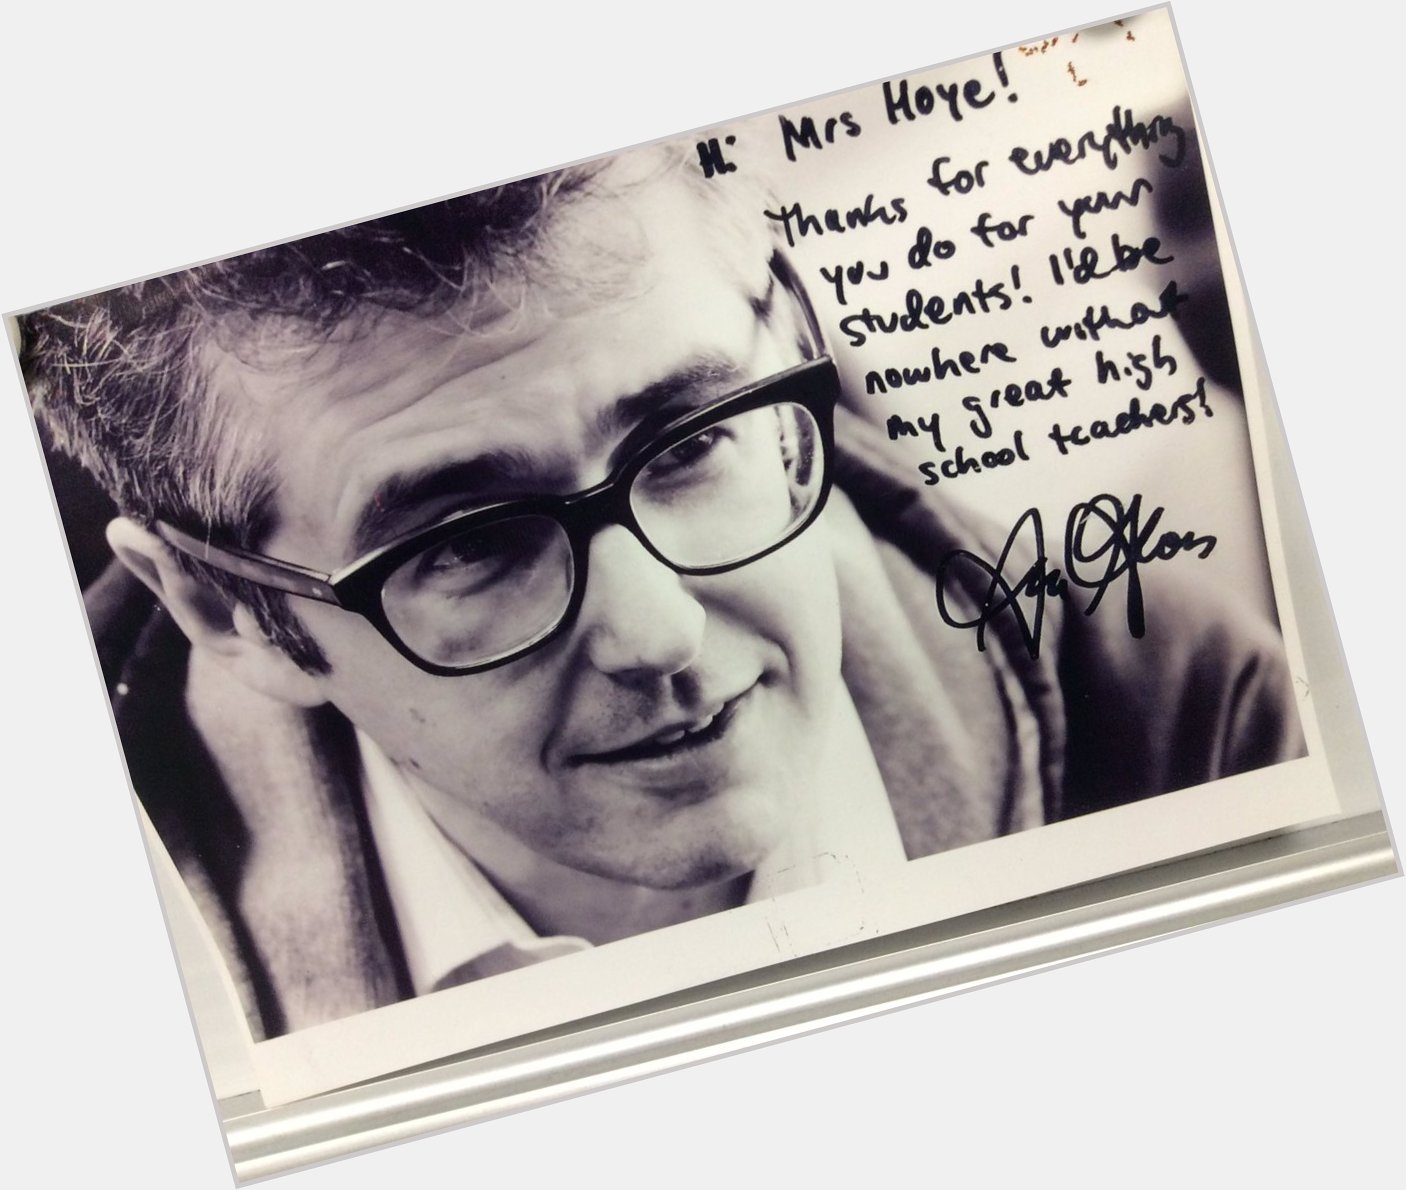 Happy Birthday to my favorite NPR host, Ira Glass! 